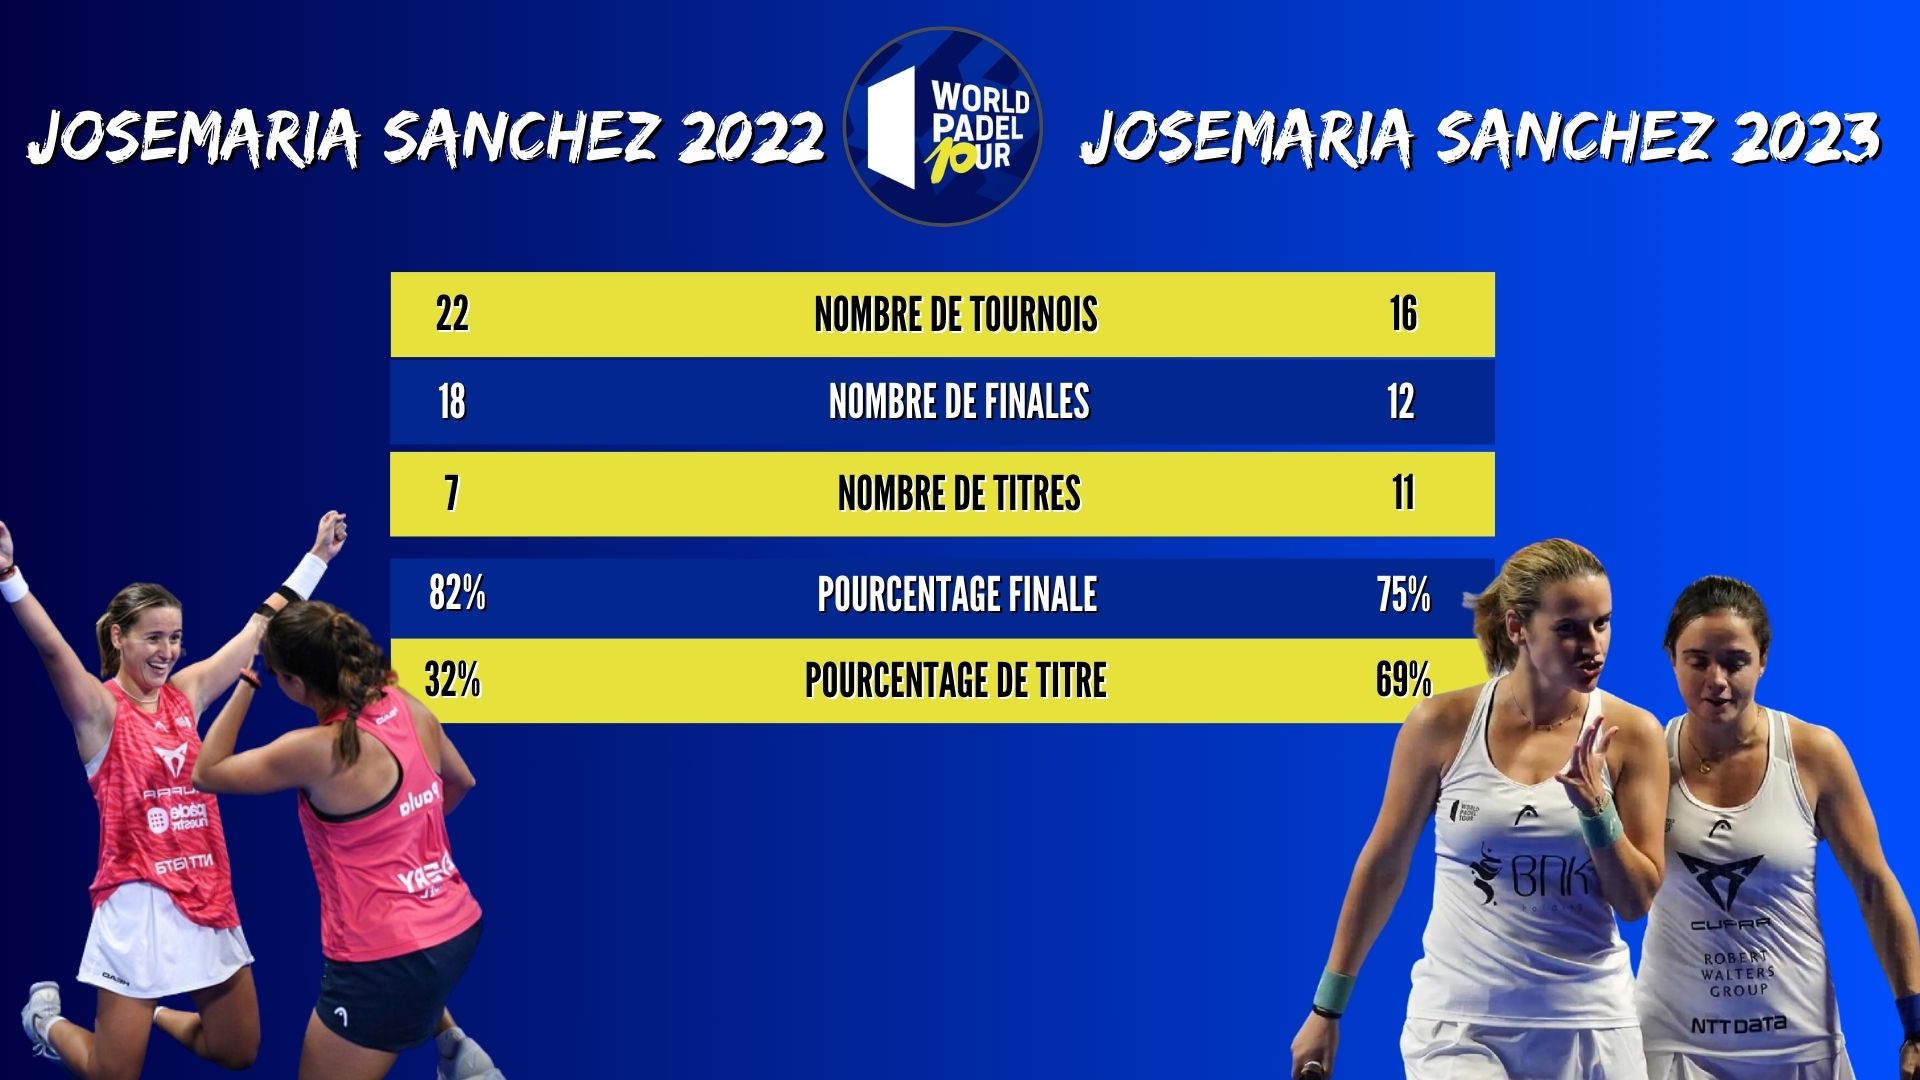 Jozefmaria Sánchez 2022 versus Jozefmaria Sánchez 2023